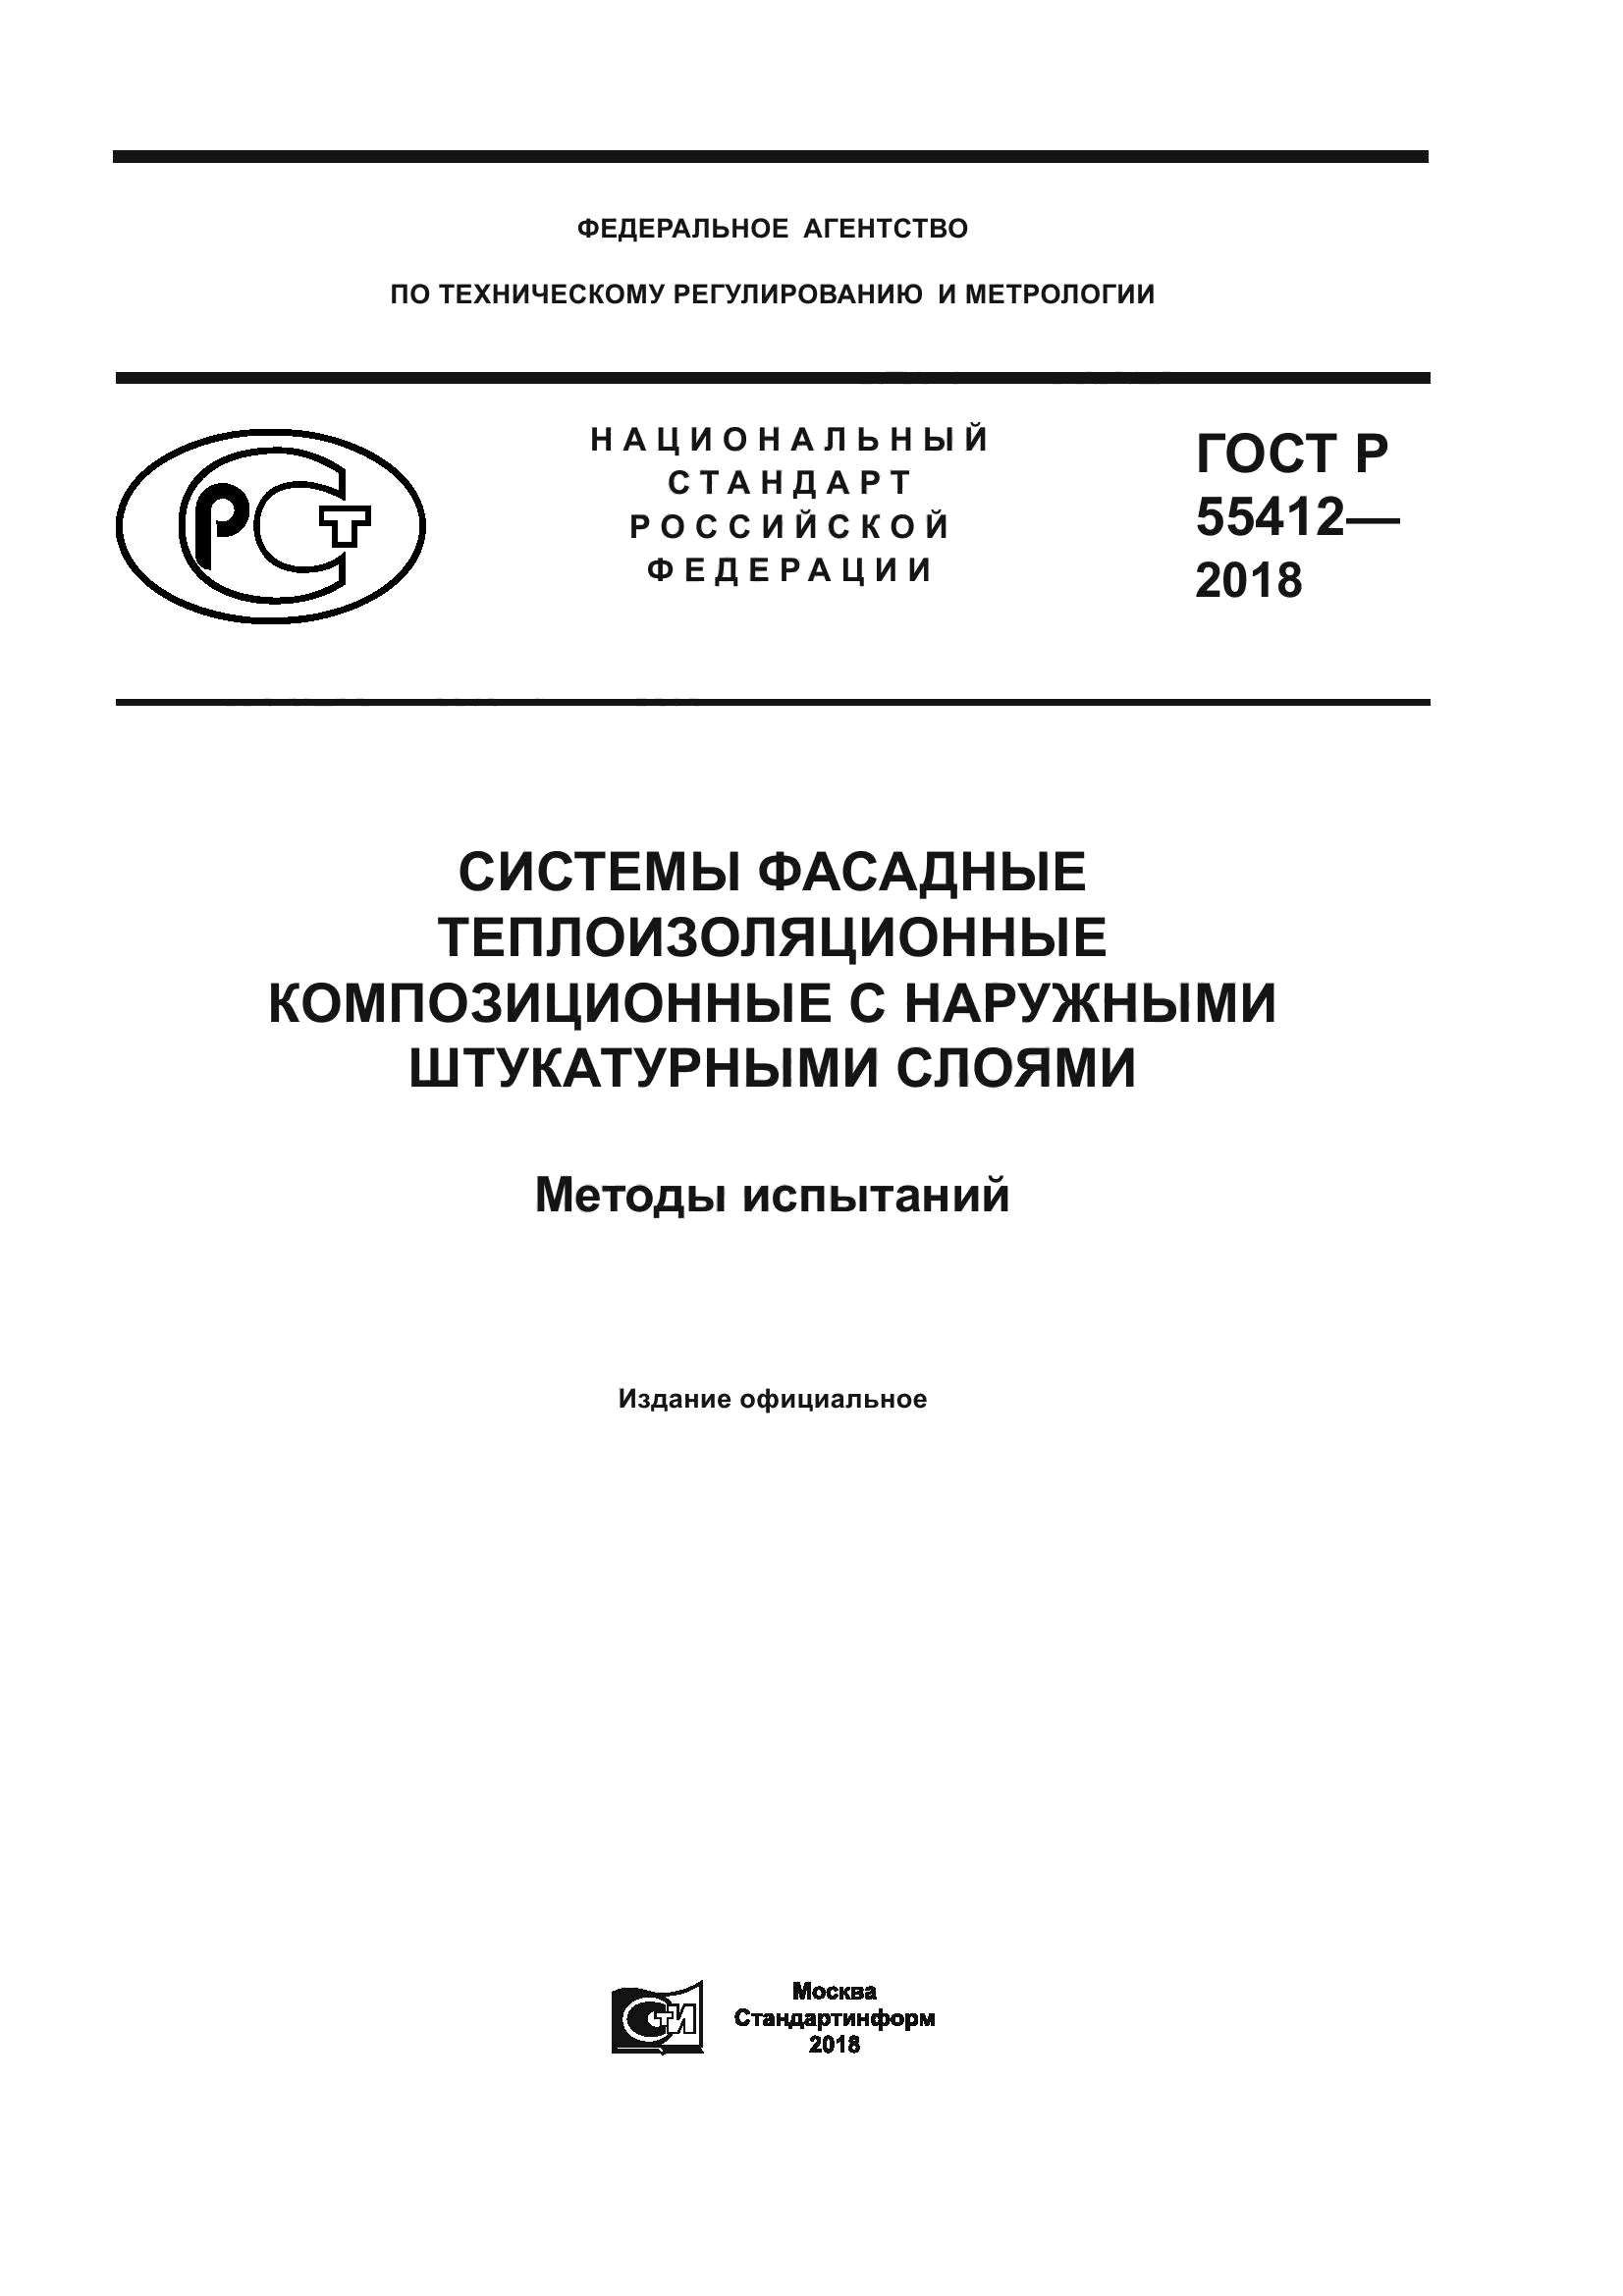 ГОСТ Р 55412-2018